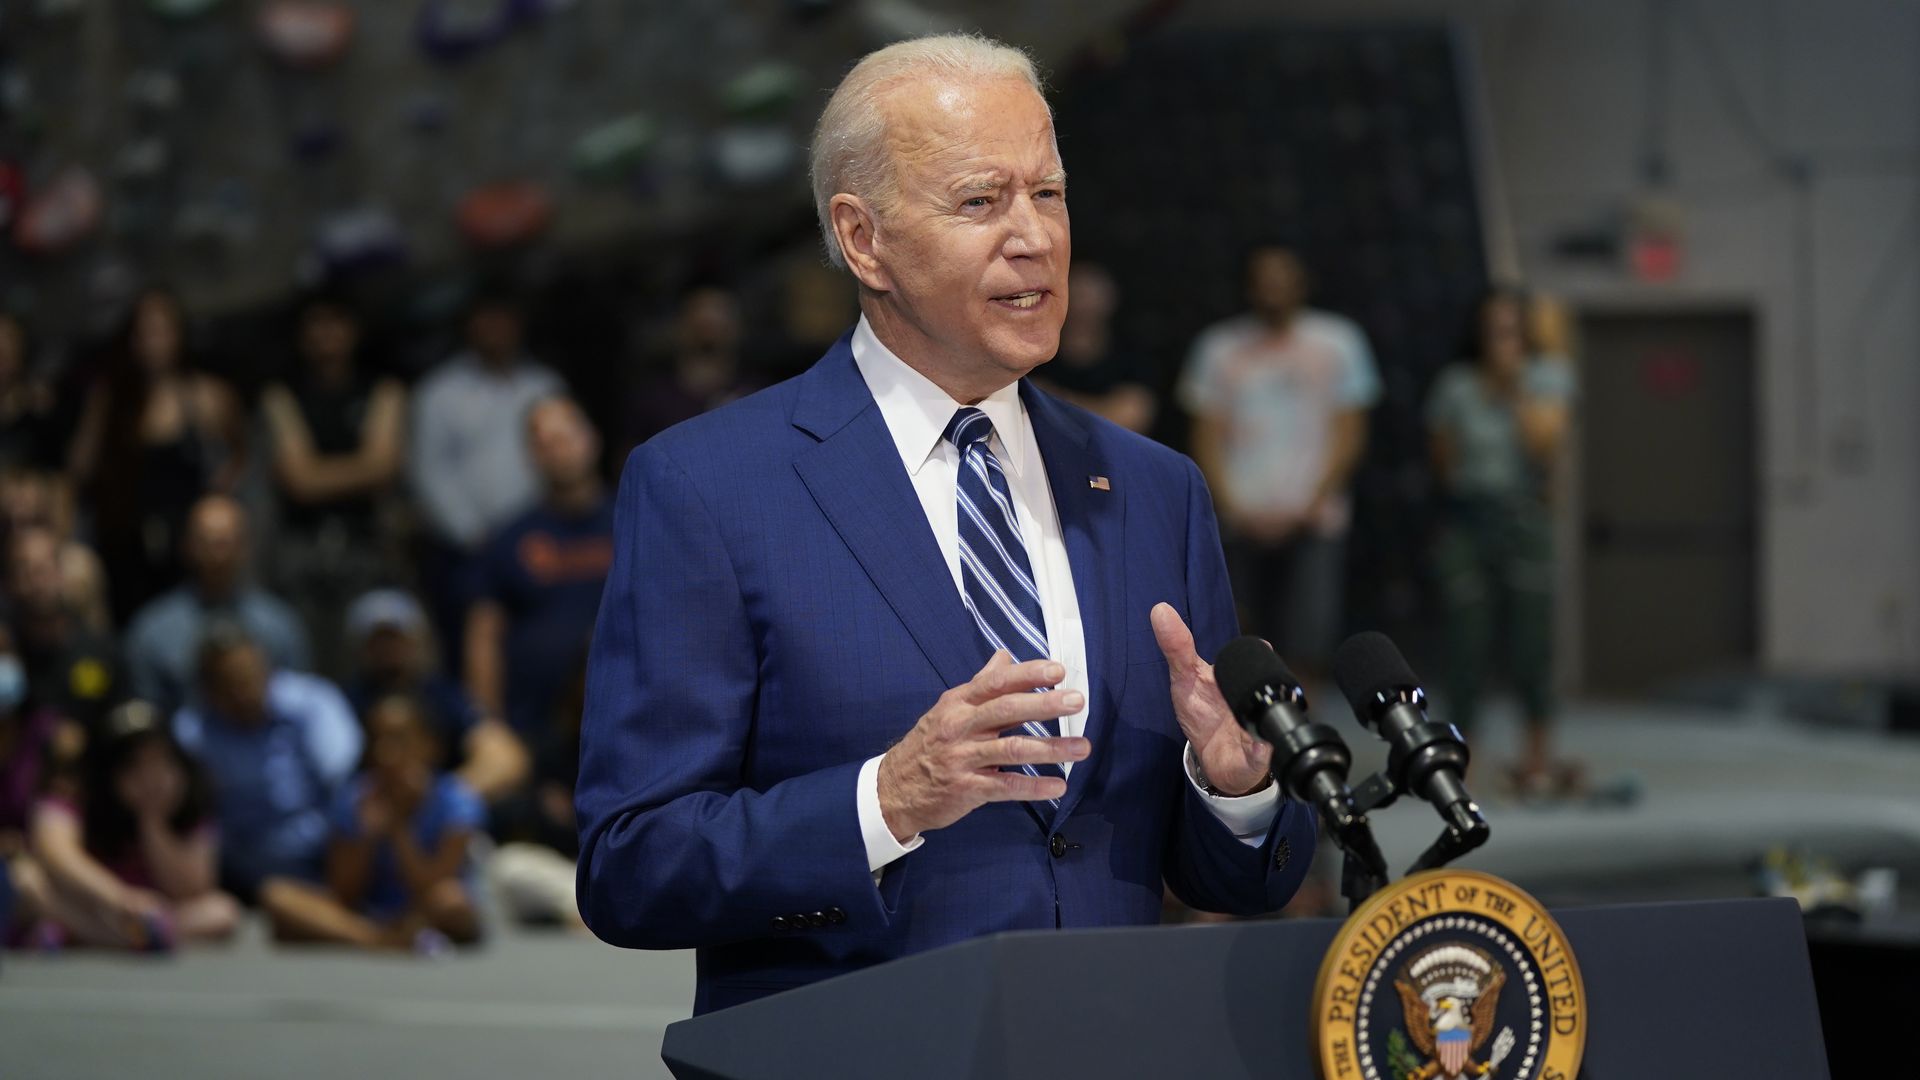 U.S. President Joe Biden speaks at Sportrock Climbing Center.